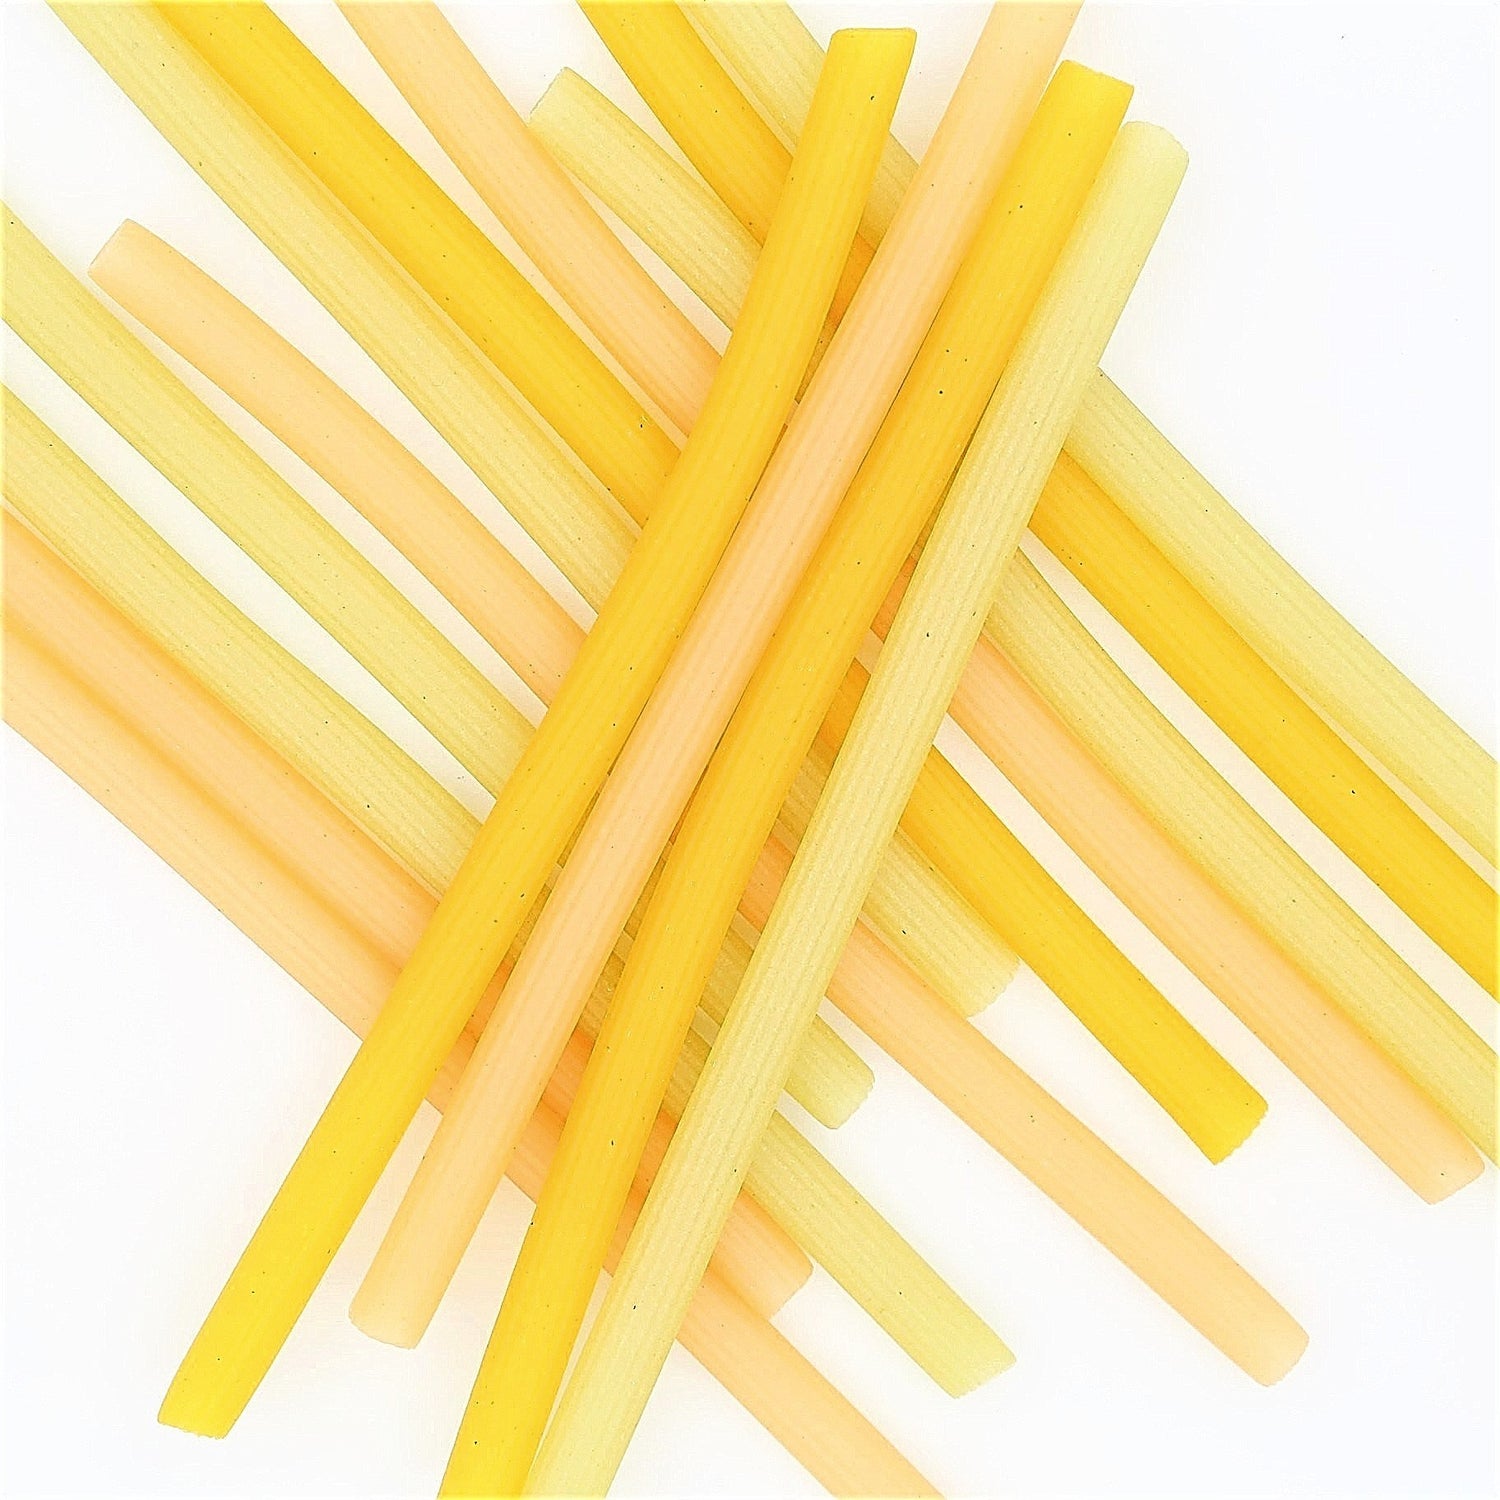 Pasta Life Gluten-Free Pasta Straws Review 2021